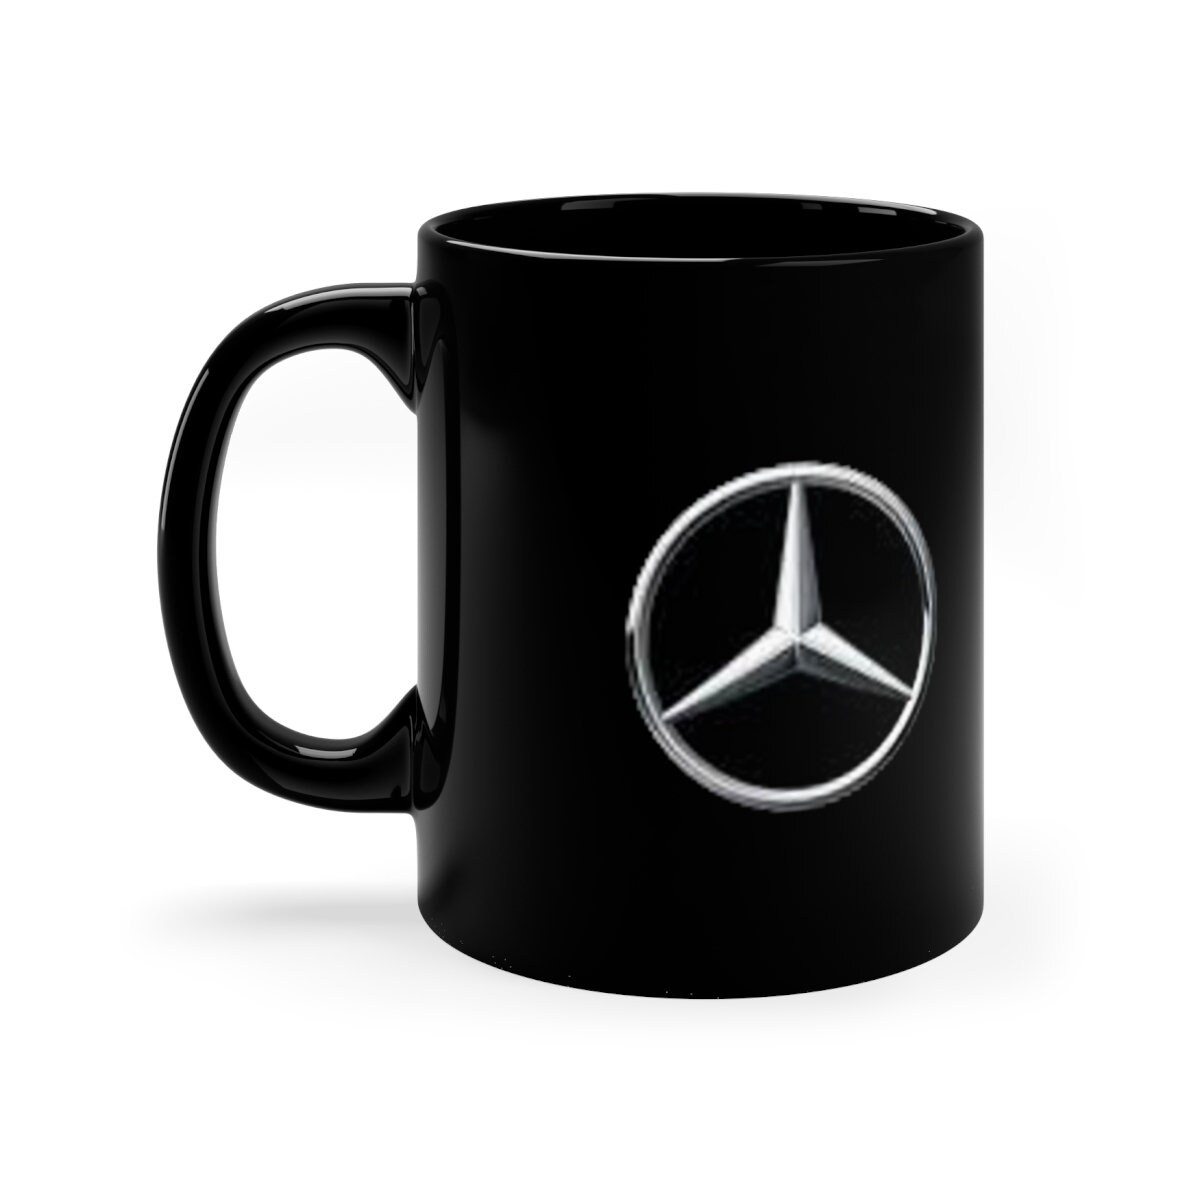 Mercedes-Benz Black and White Mug Coffee Tea Display Collectible